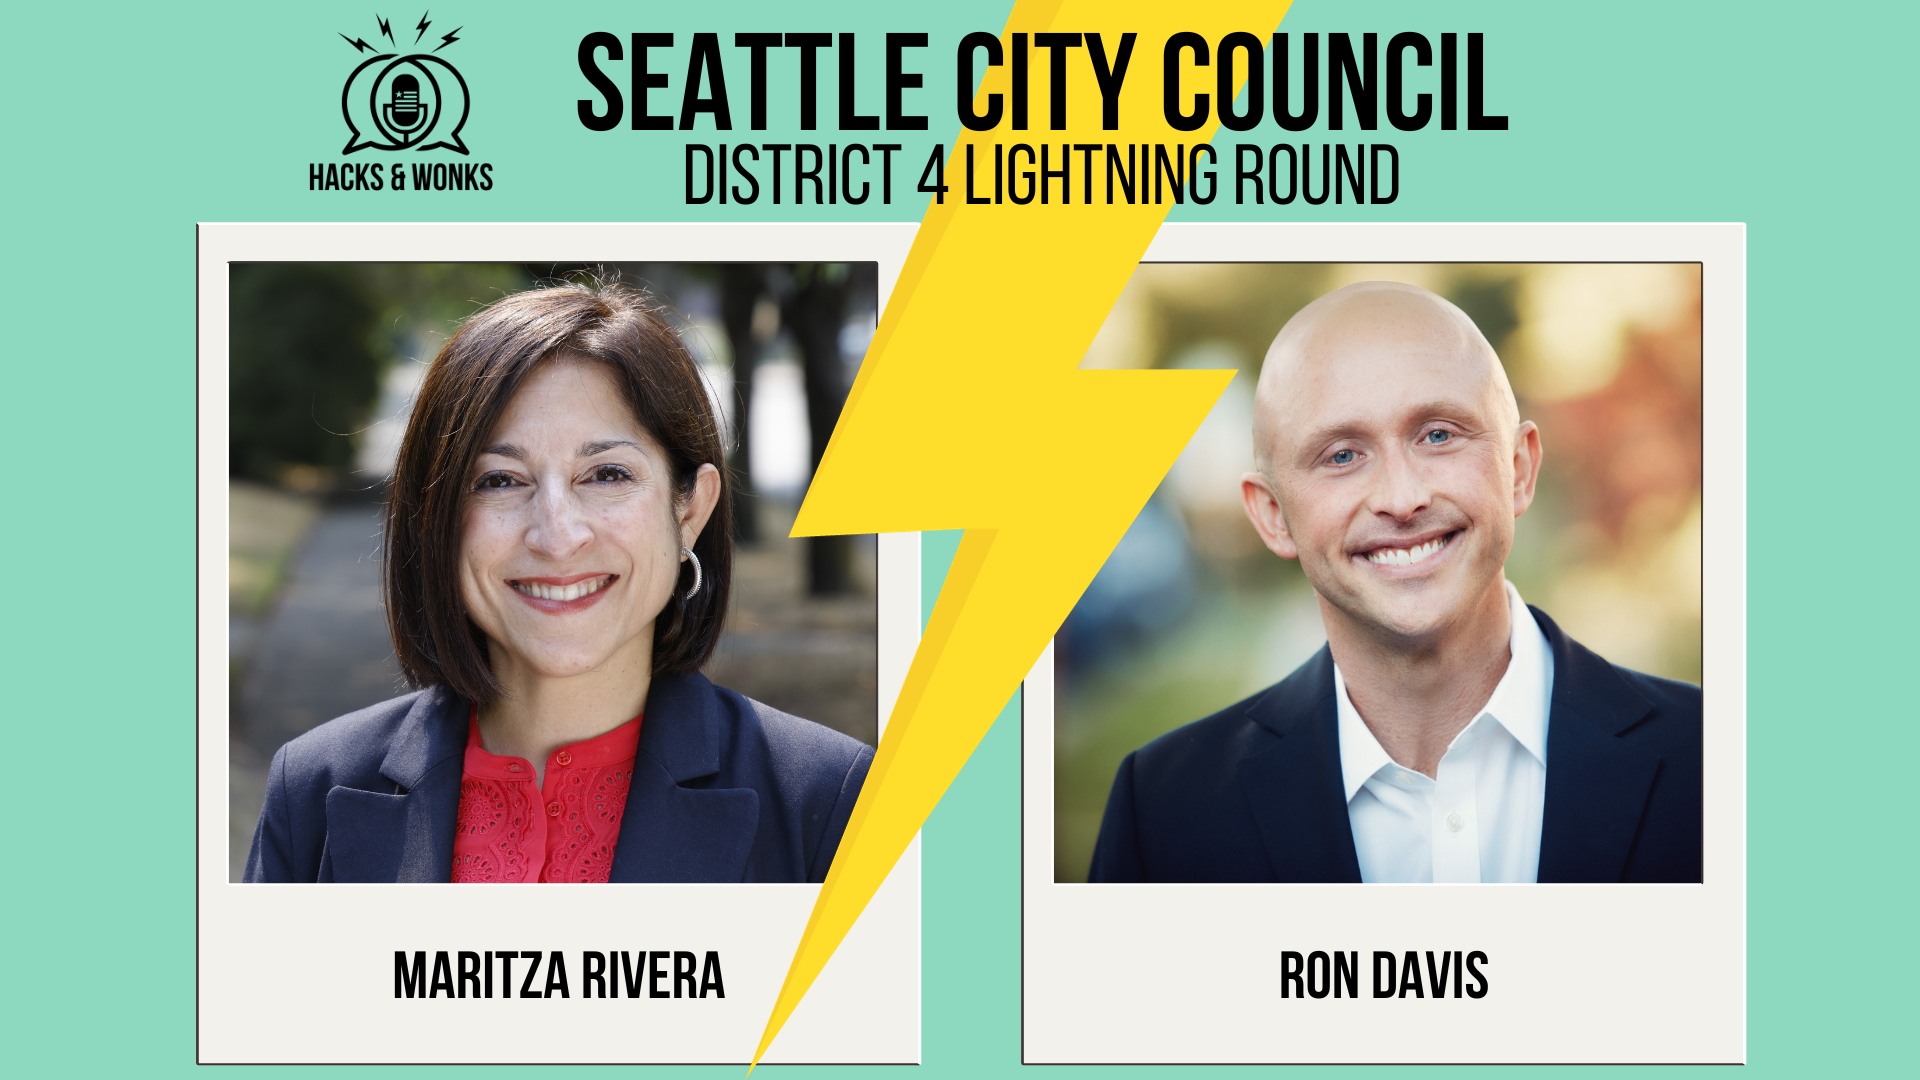 Lightning bolt divides photos of the District 4 candidates: Maritza Rivera and Ron Davis